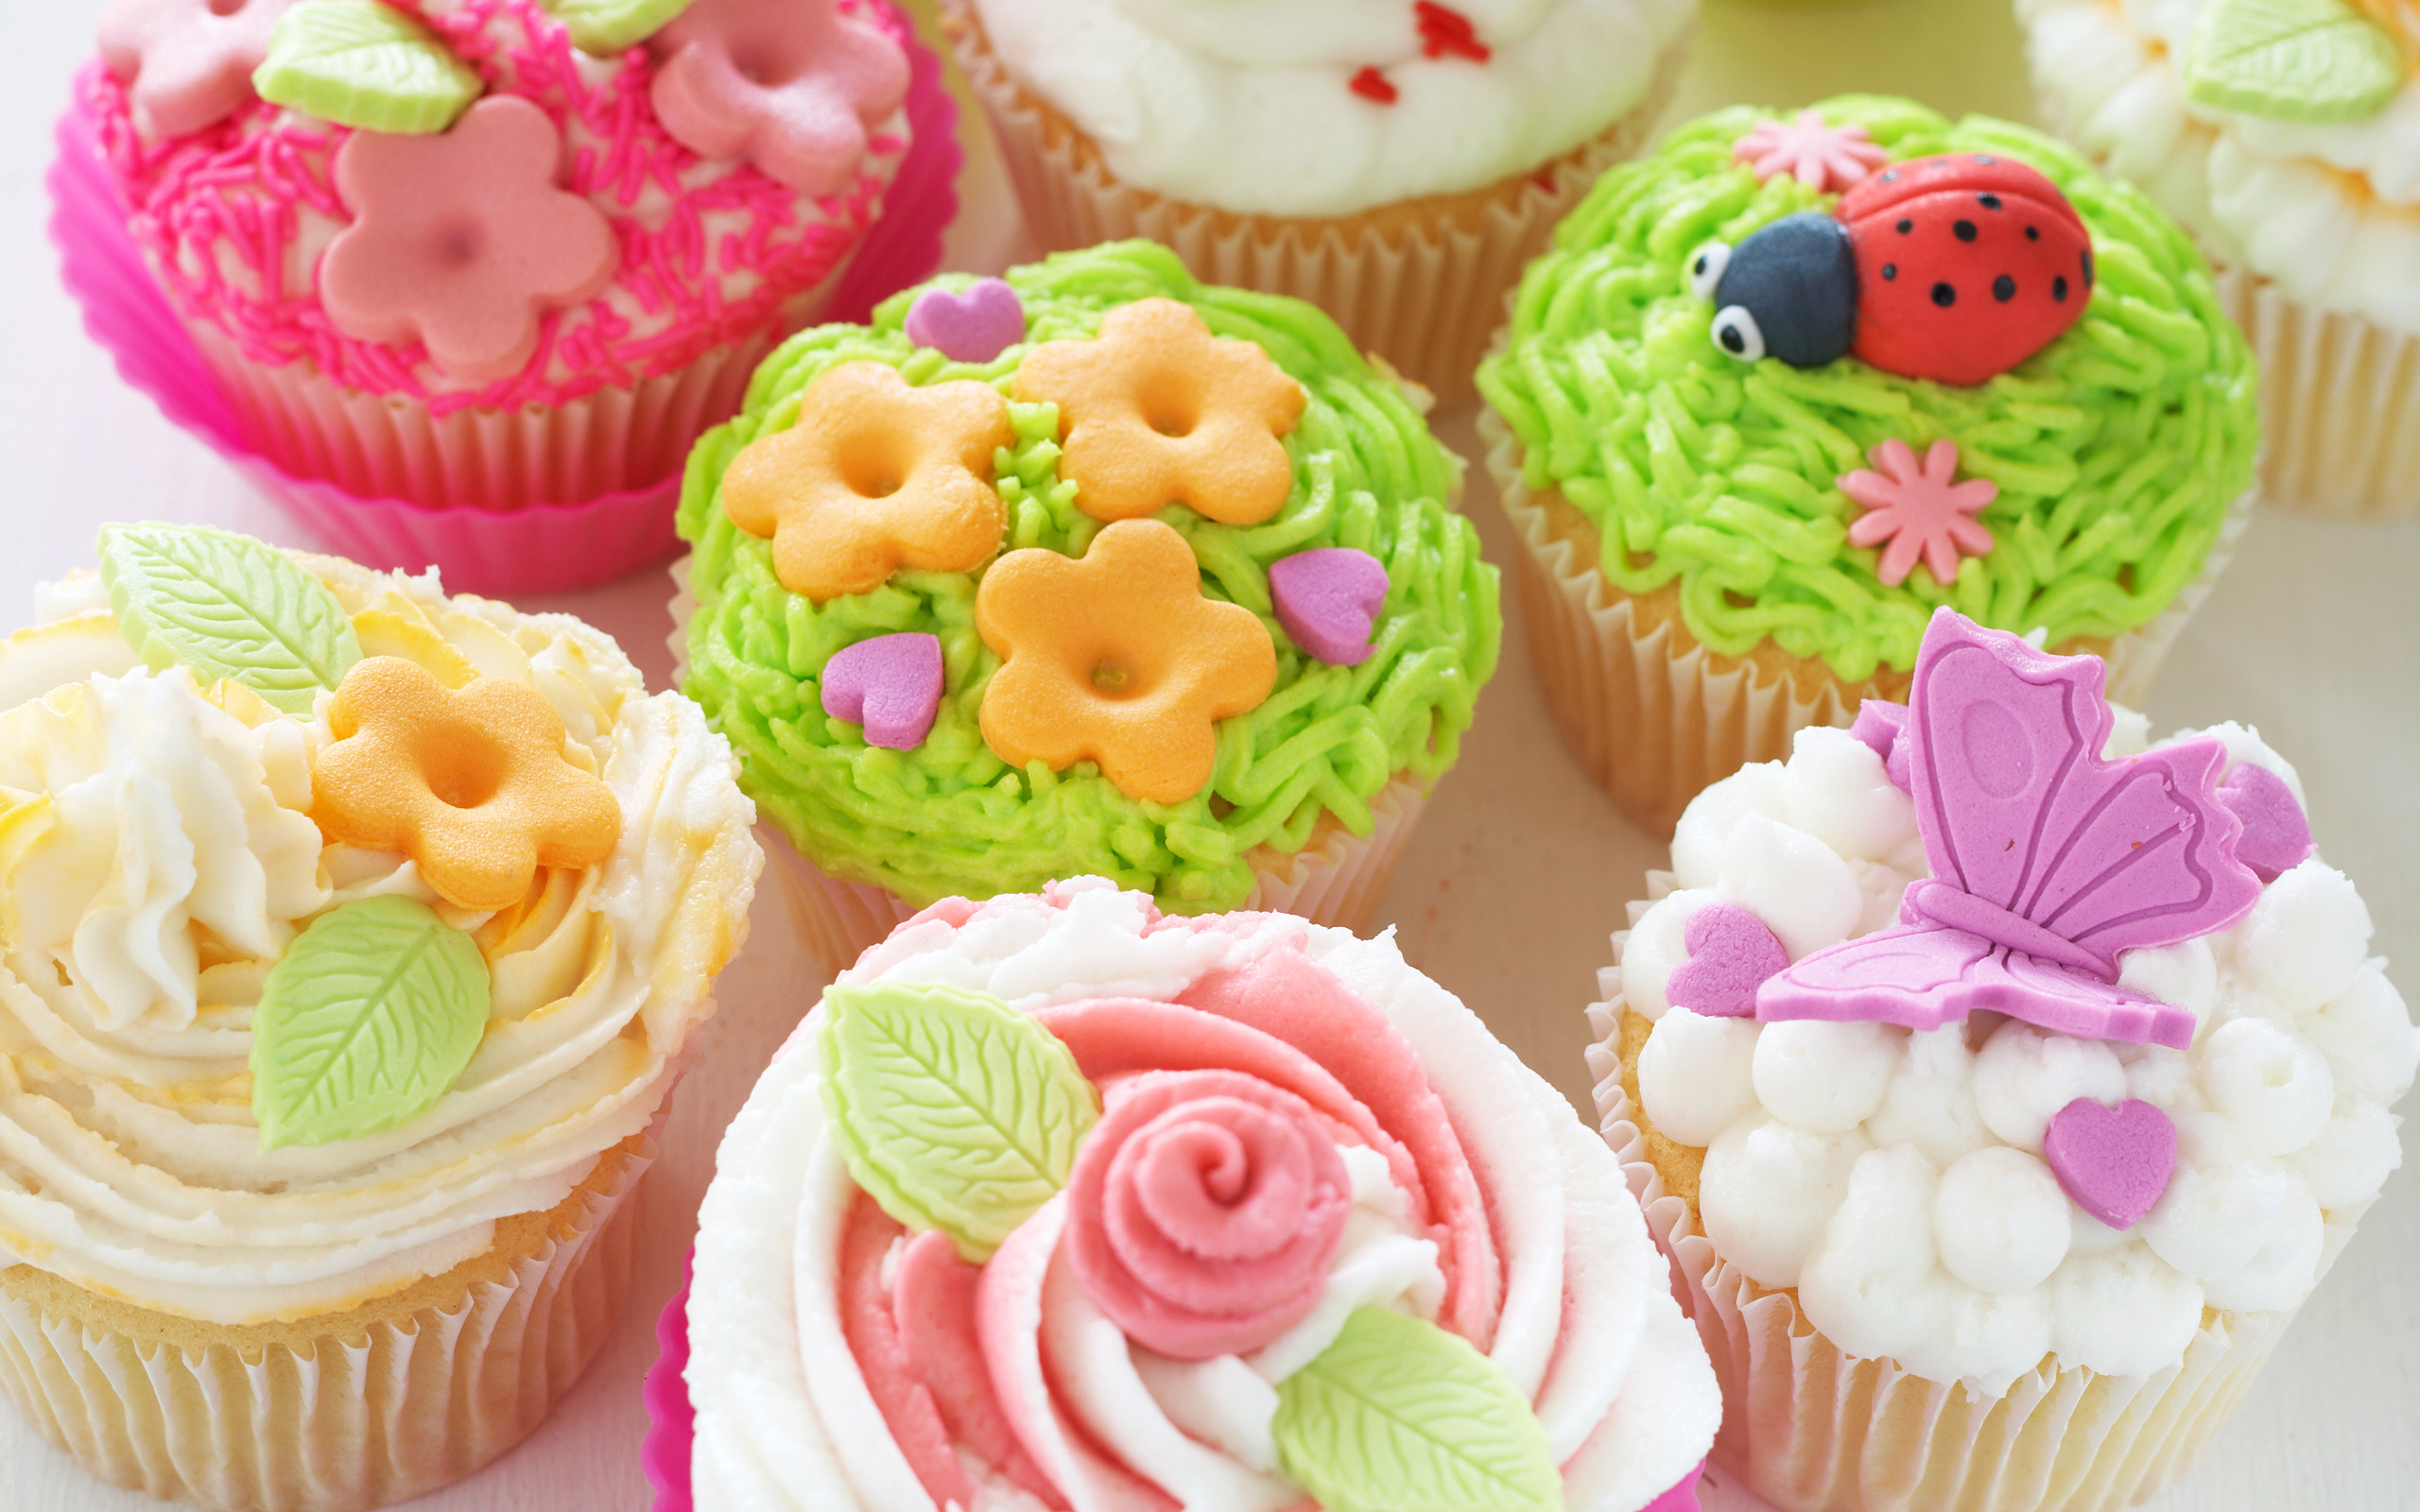 Mouth-watering cupcakes, HD wallpaper, Tempting dessert, Sweet delight, 2560x1600 HD Desktop